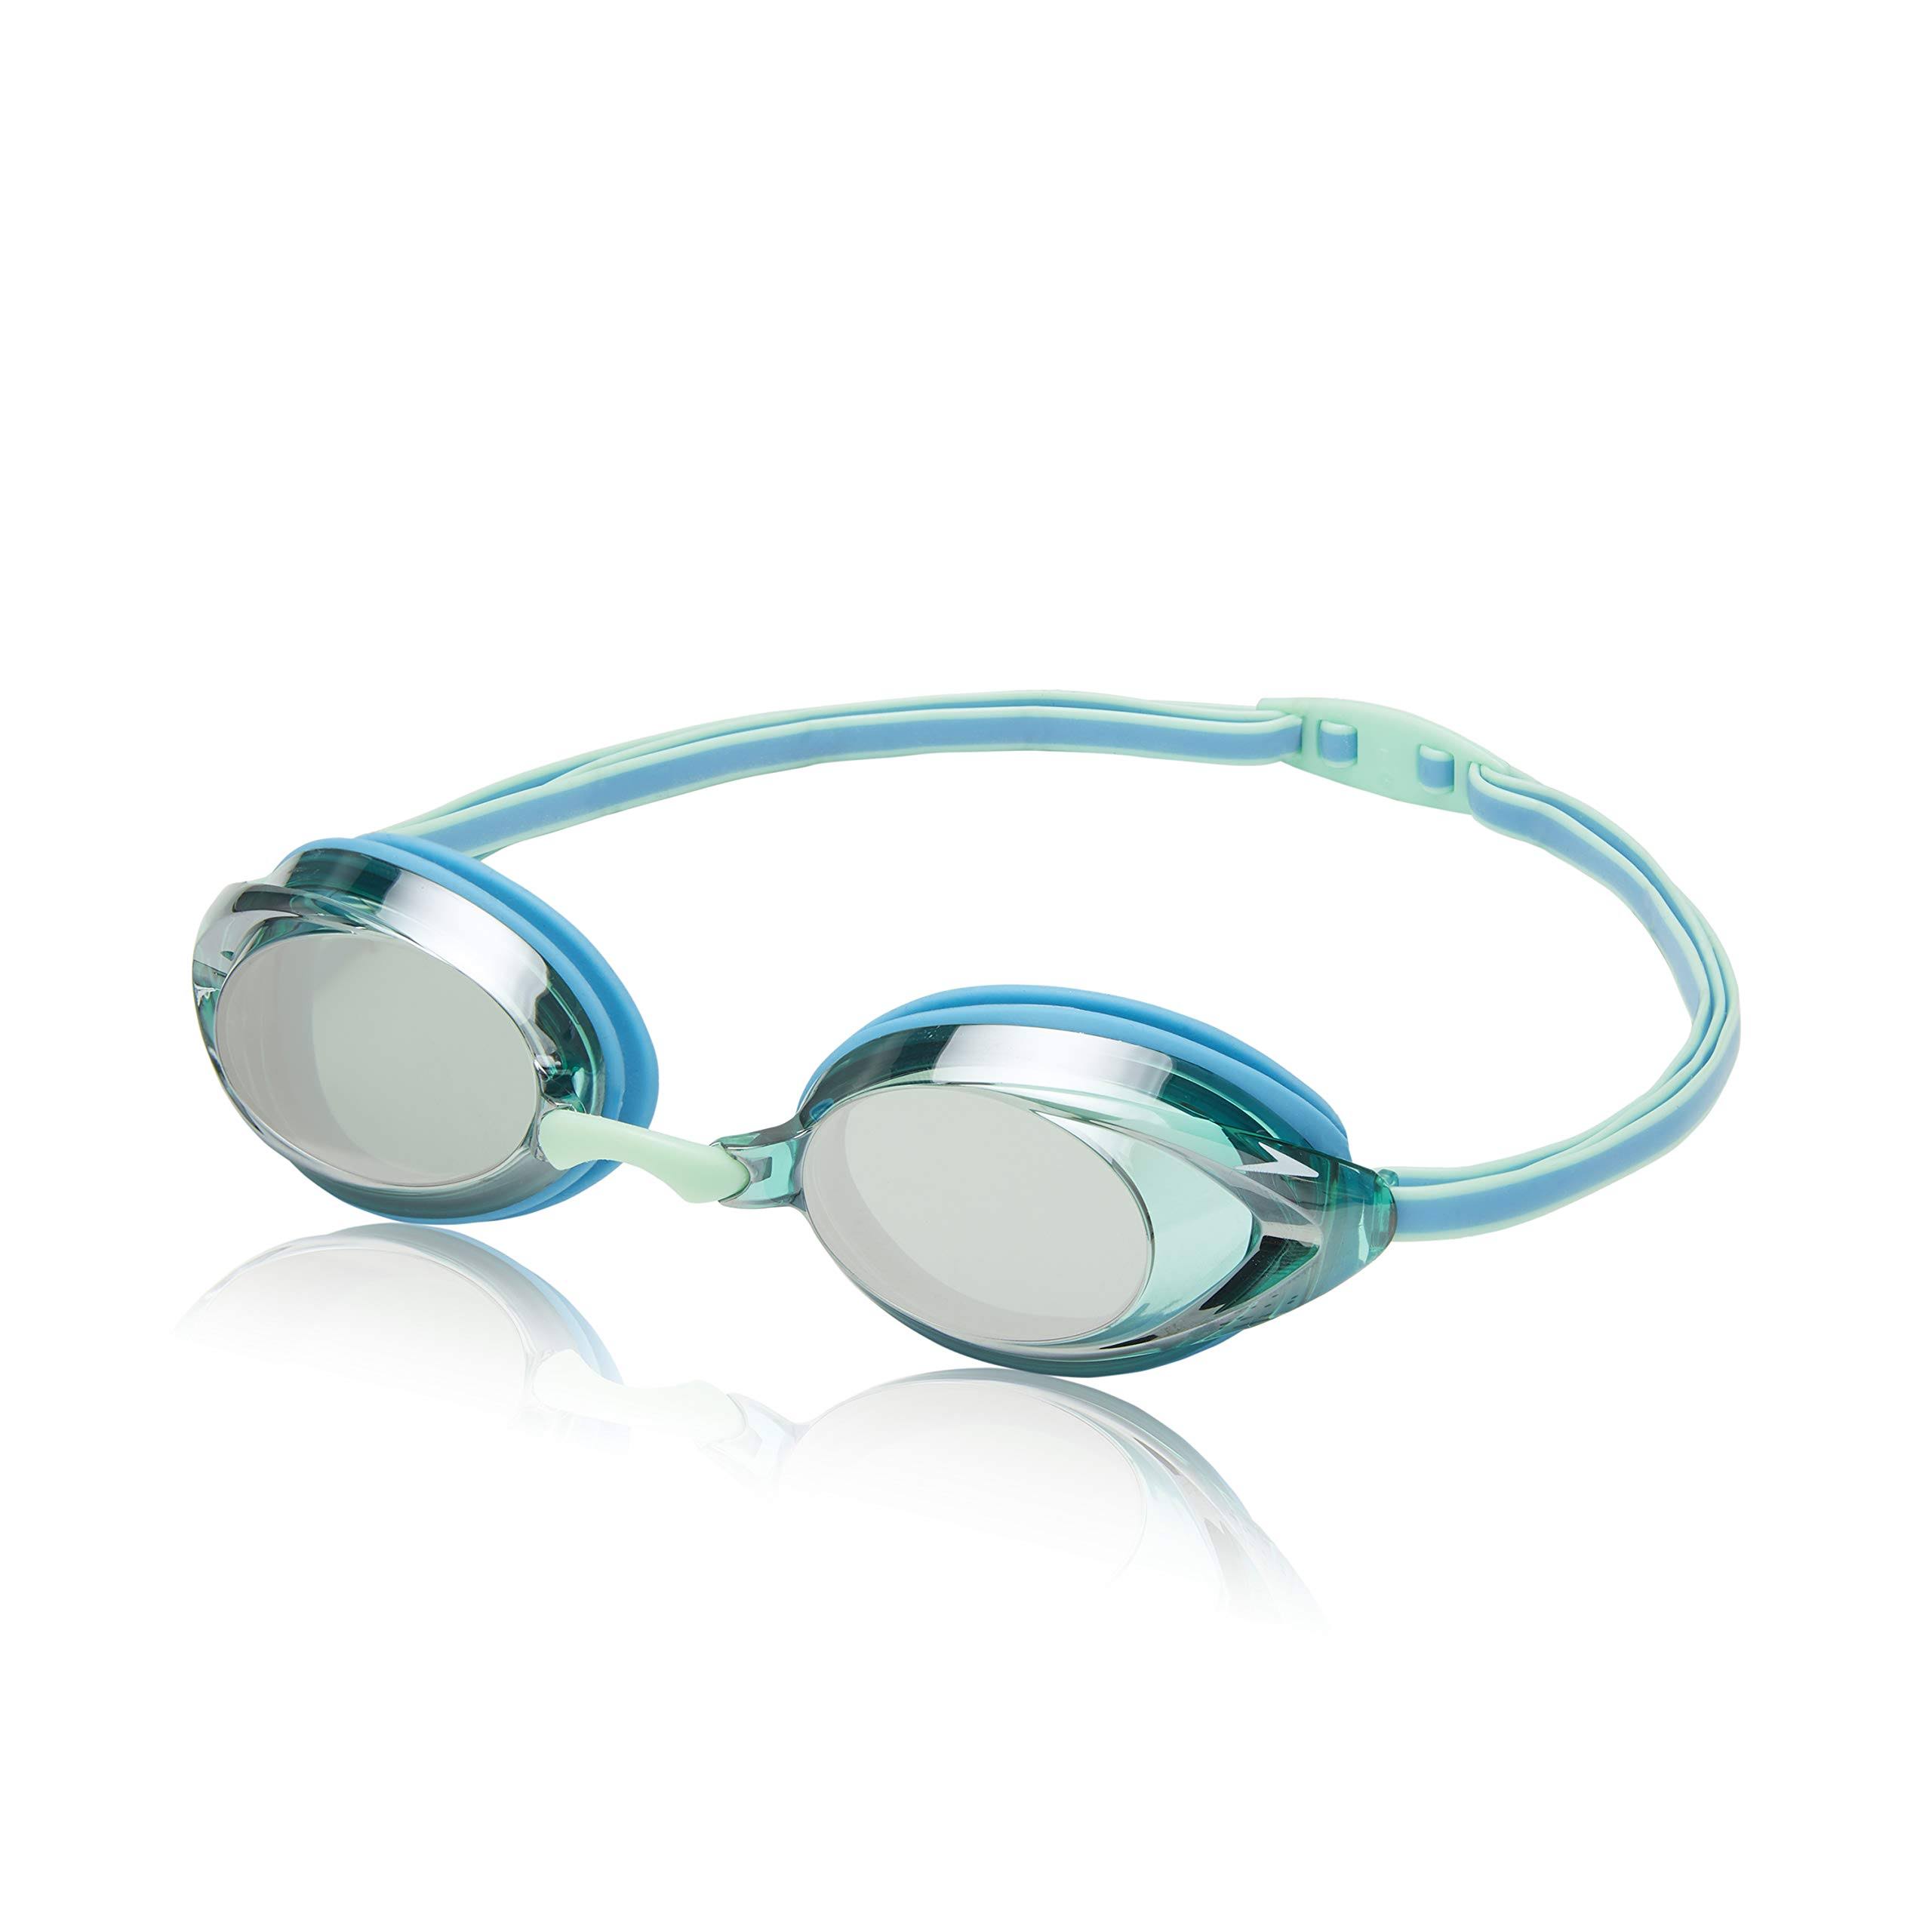 Speedo Women's Vanquisher 2.0 Mirrored Goggles, Blue/Grey